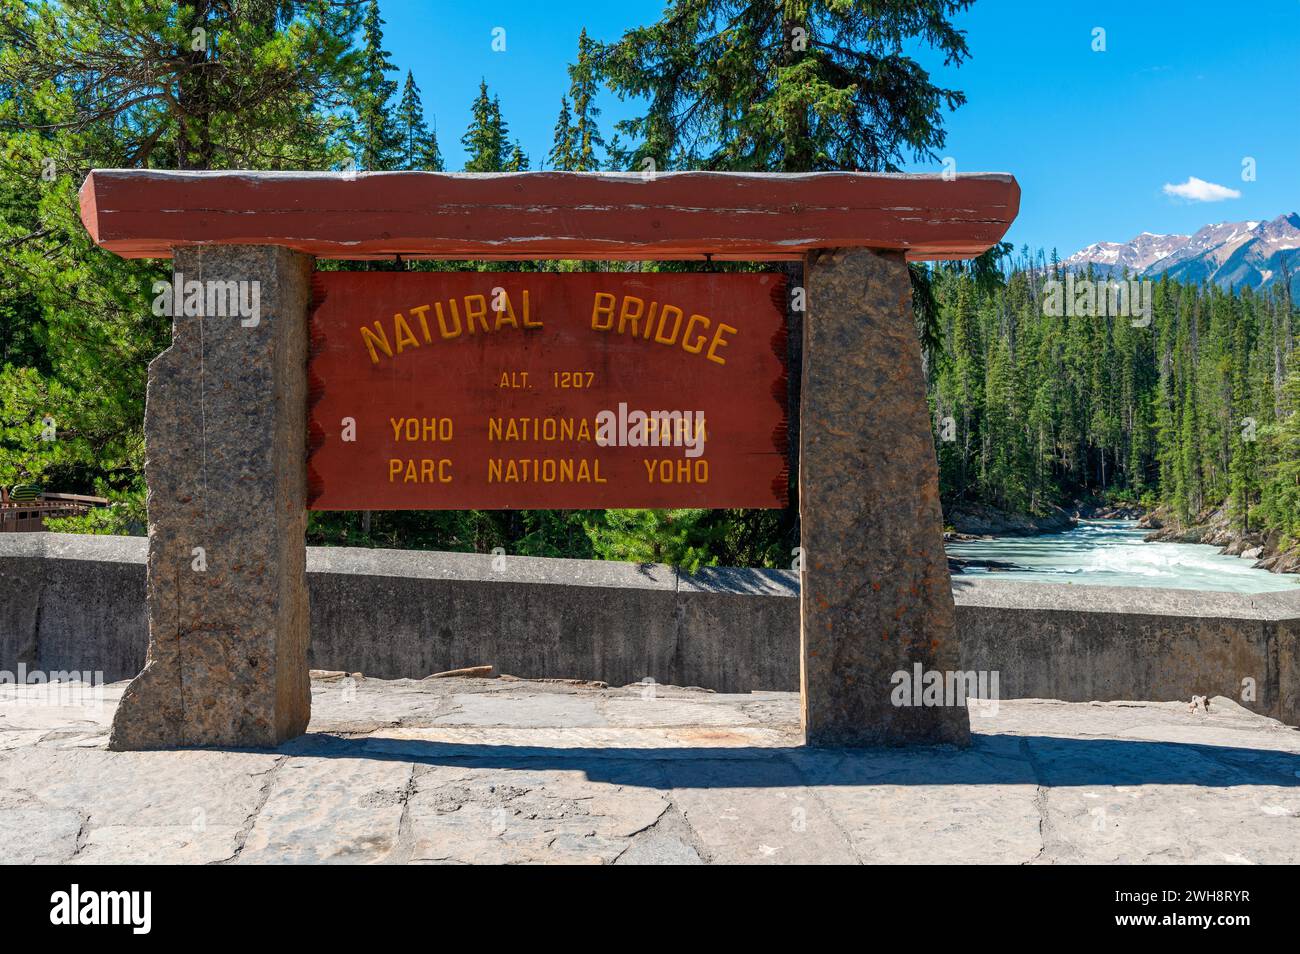 Natural Bridge Felsformation Schild am Kicking Horse River, Yoho National Park, British Columbia, Kanada. Stockfoto